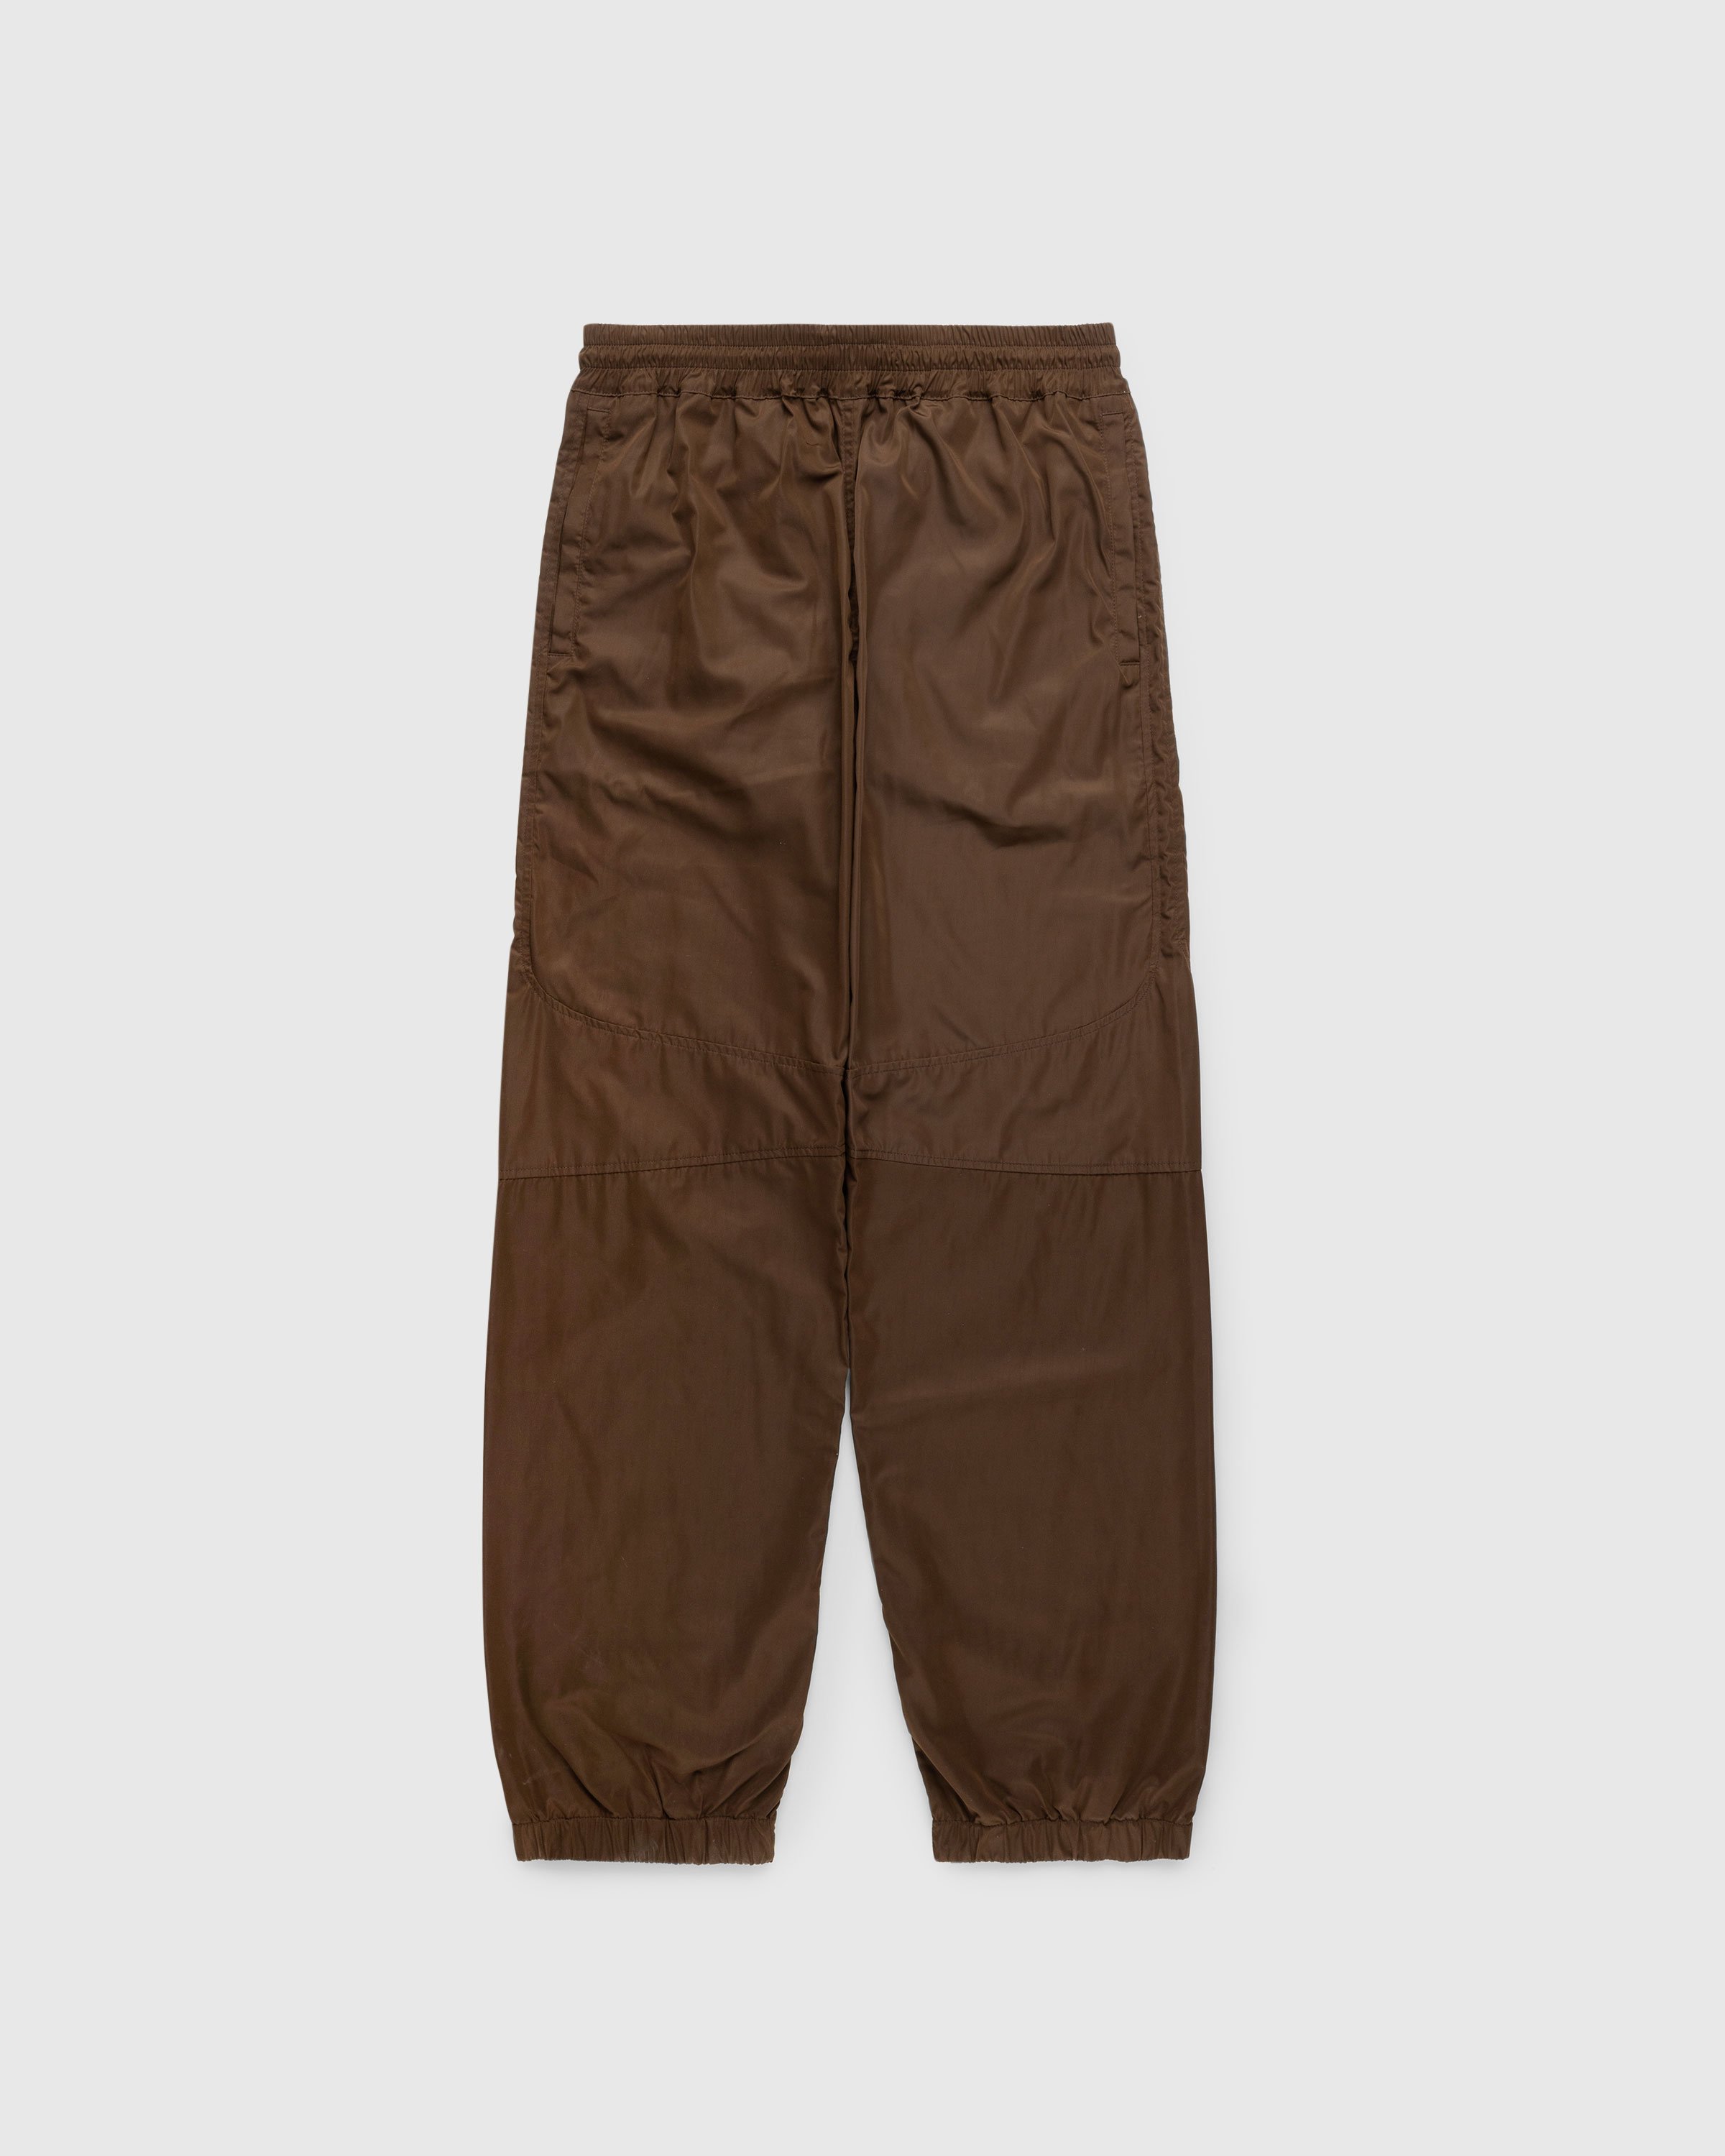 RANRA - Is Pants Brown - Clothing - Brown - Image 1